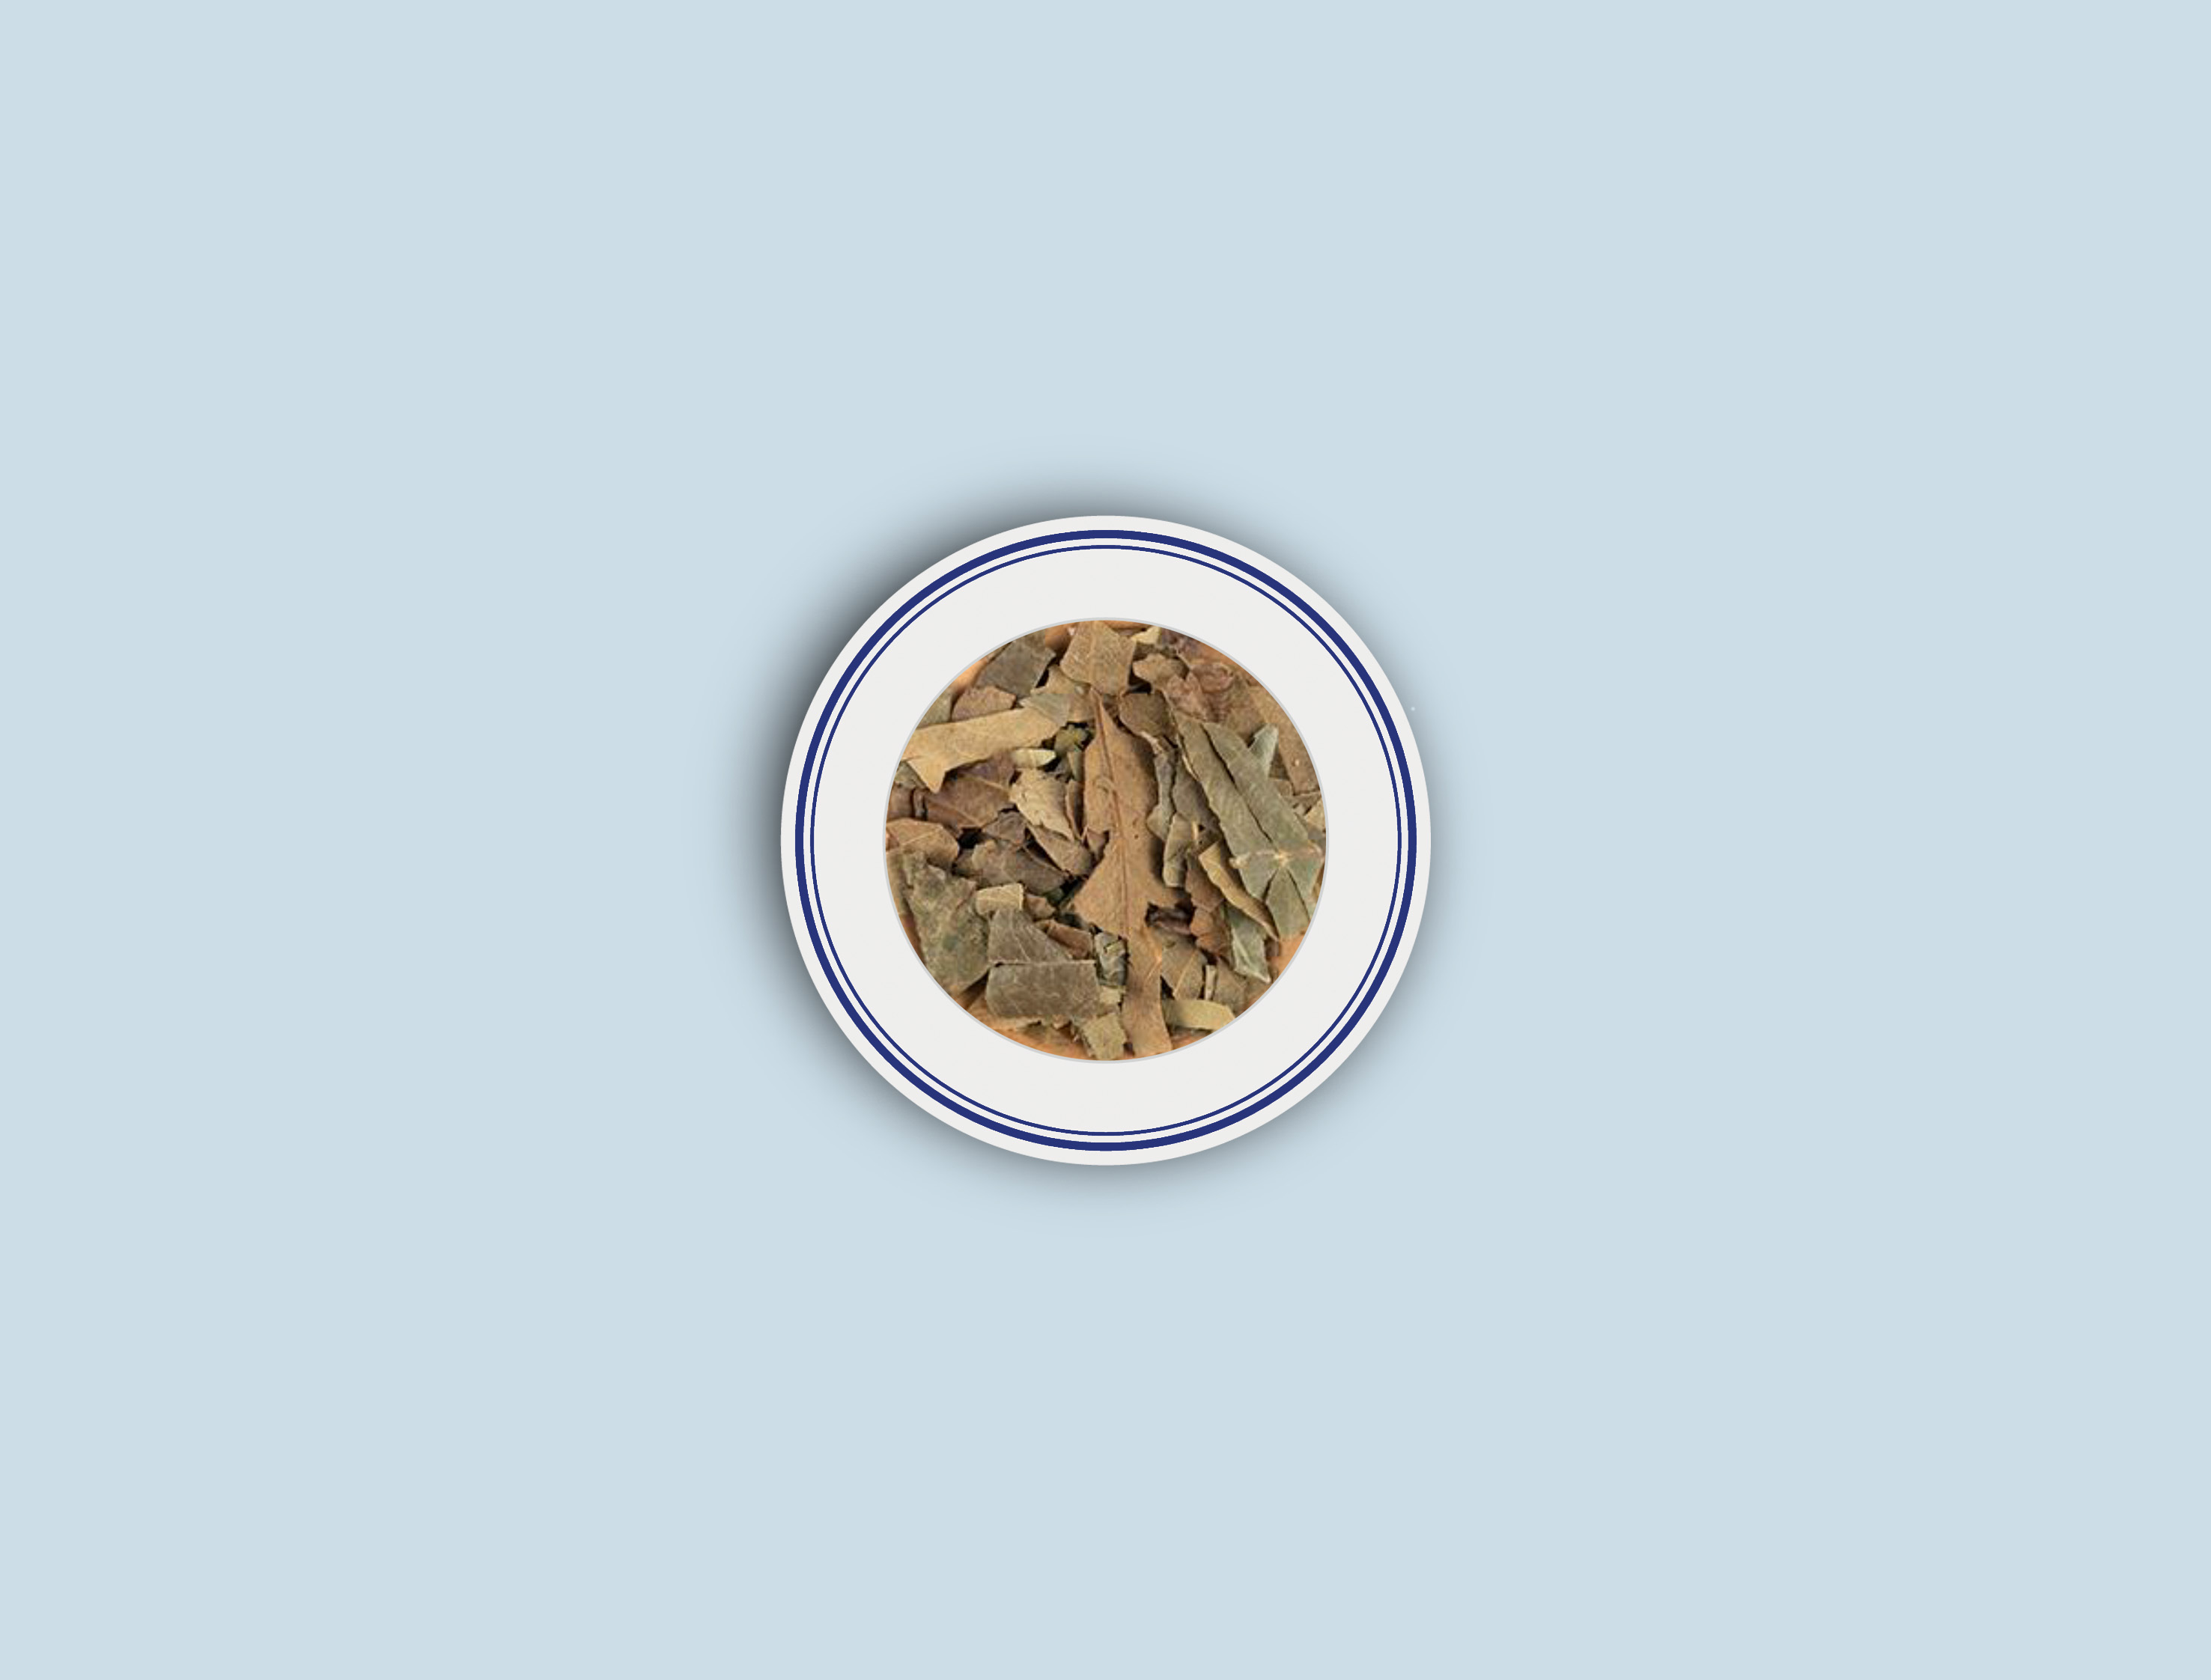 C-LOQUAT LEAVES<br /> Chinese Medicinal Herbs Folium Eriobotryae Pi Pa Ye Loquat Leaf